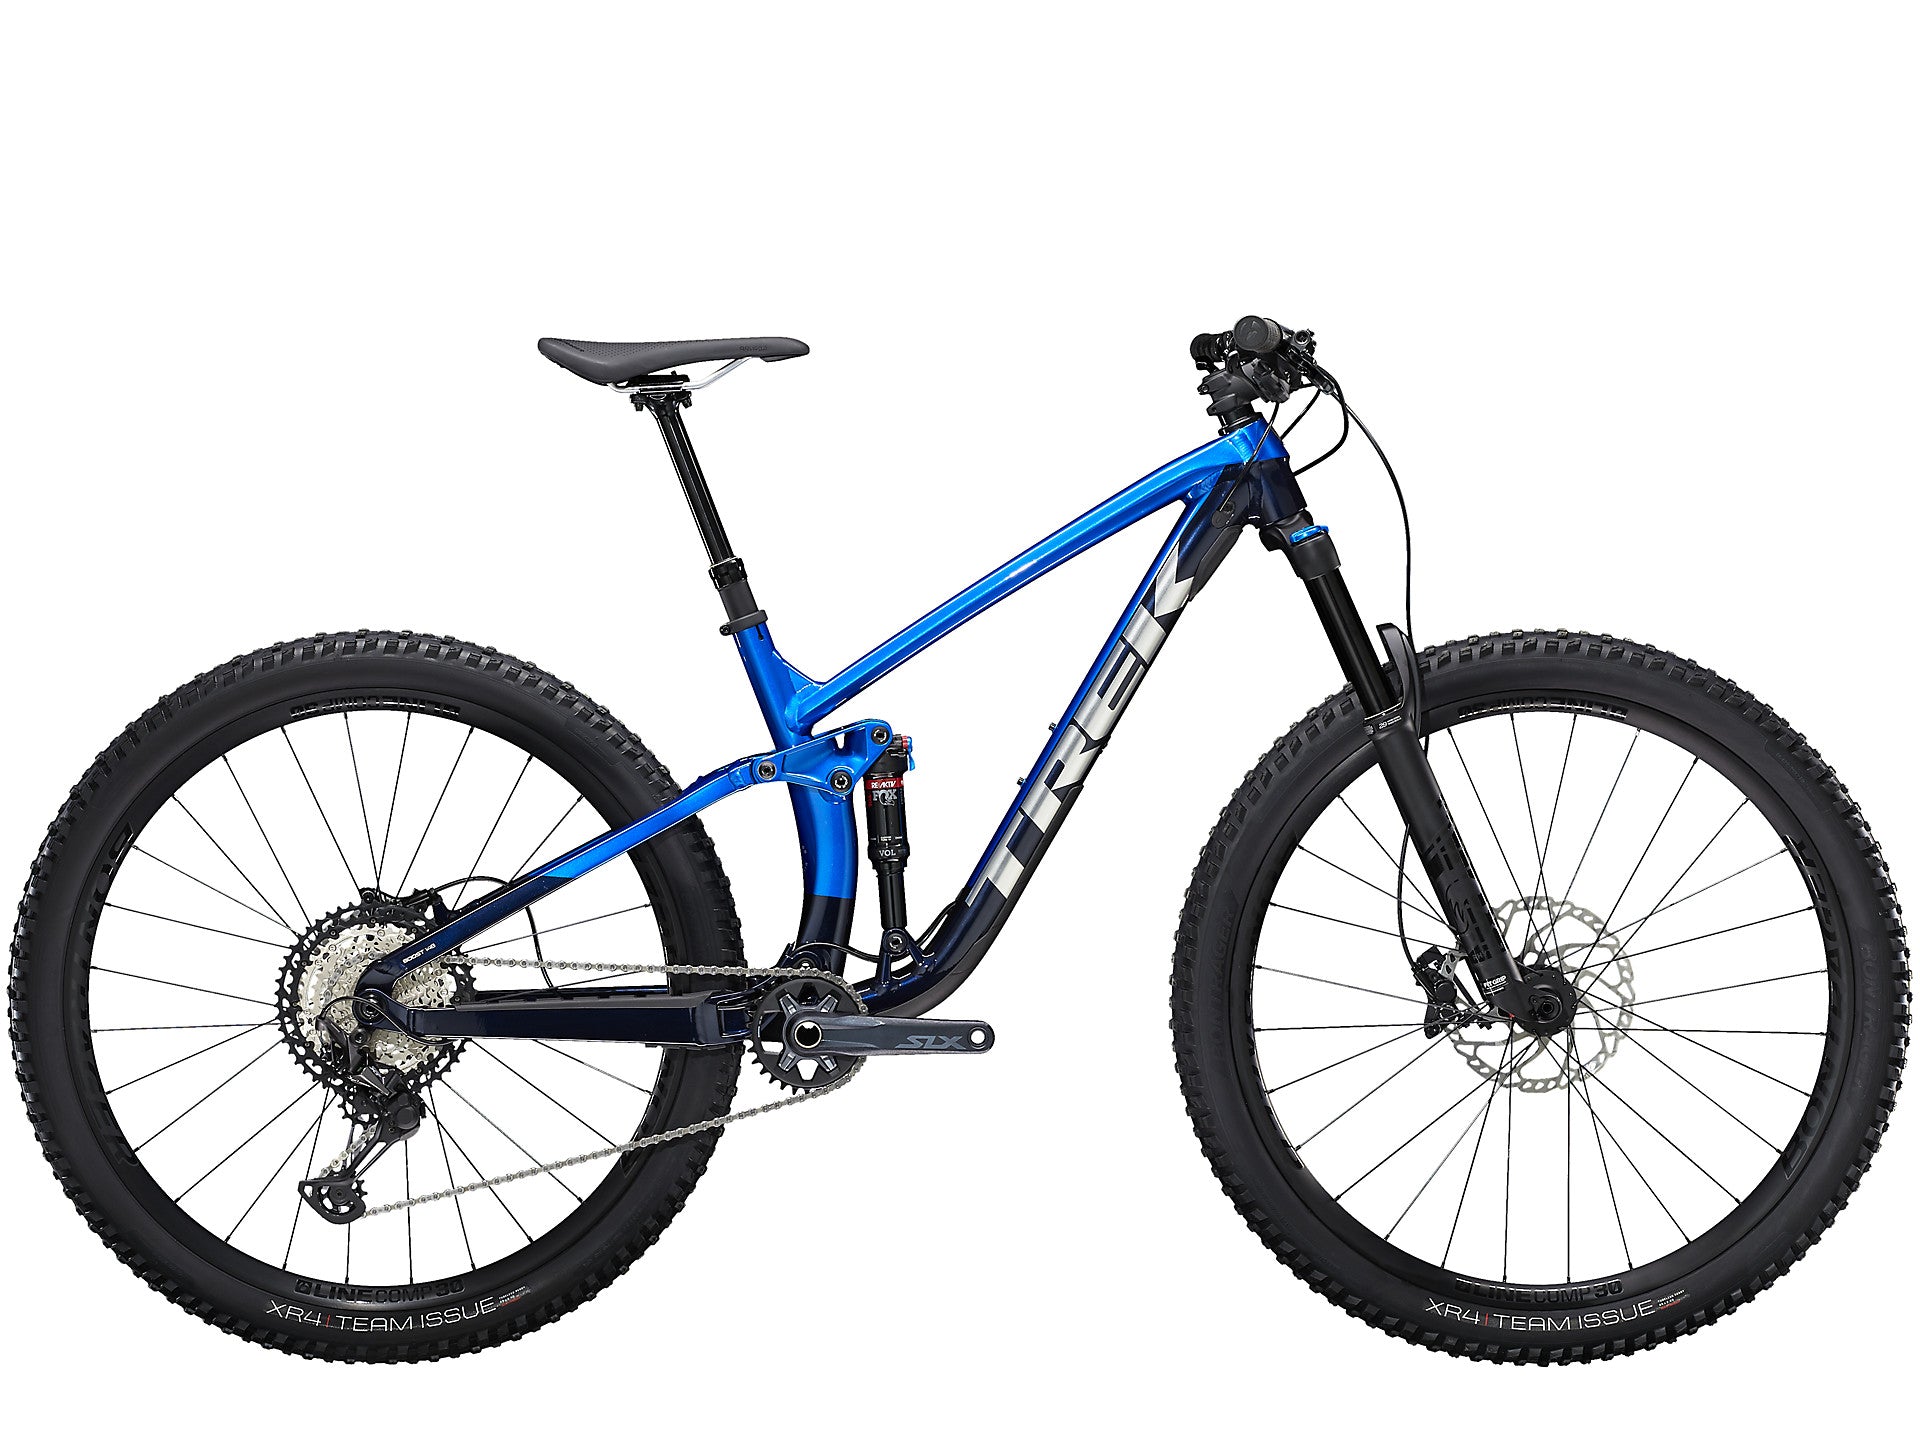 Fuel EX 8 Gen 5- Trek Bikes- Mountain Bikes- Trail Bikes